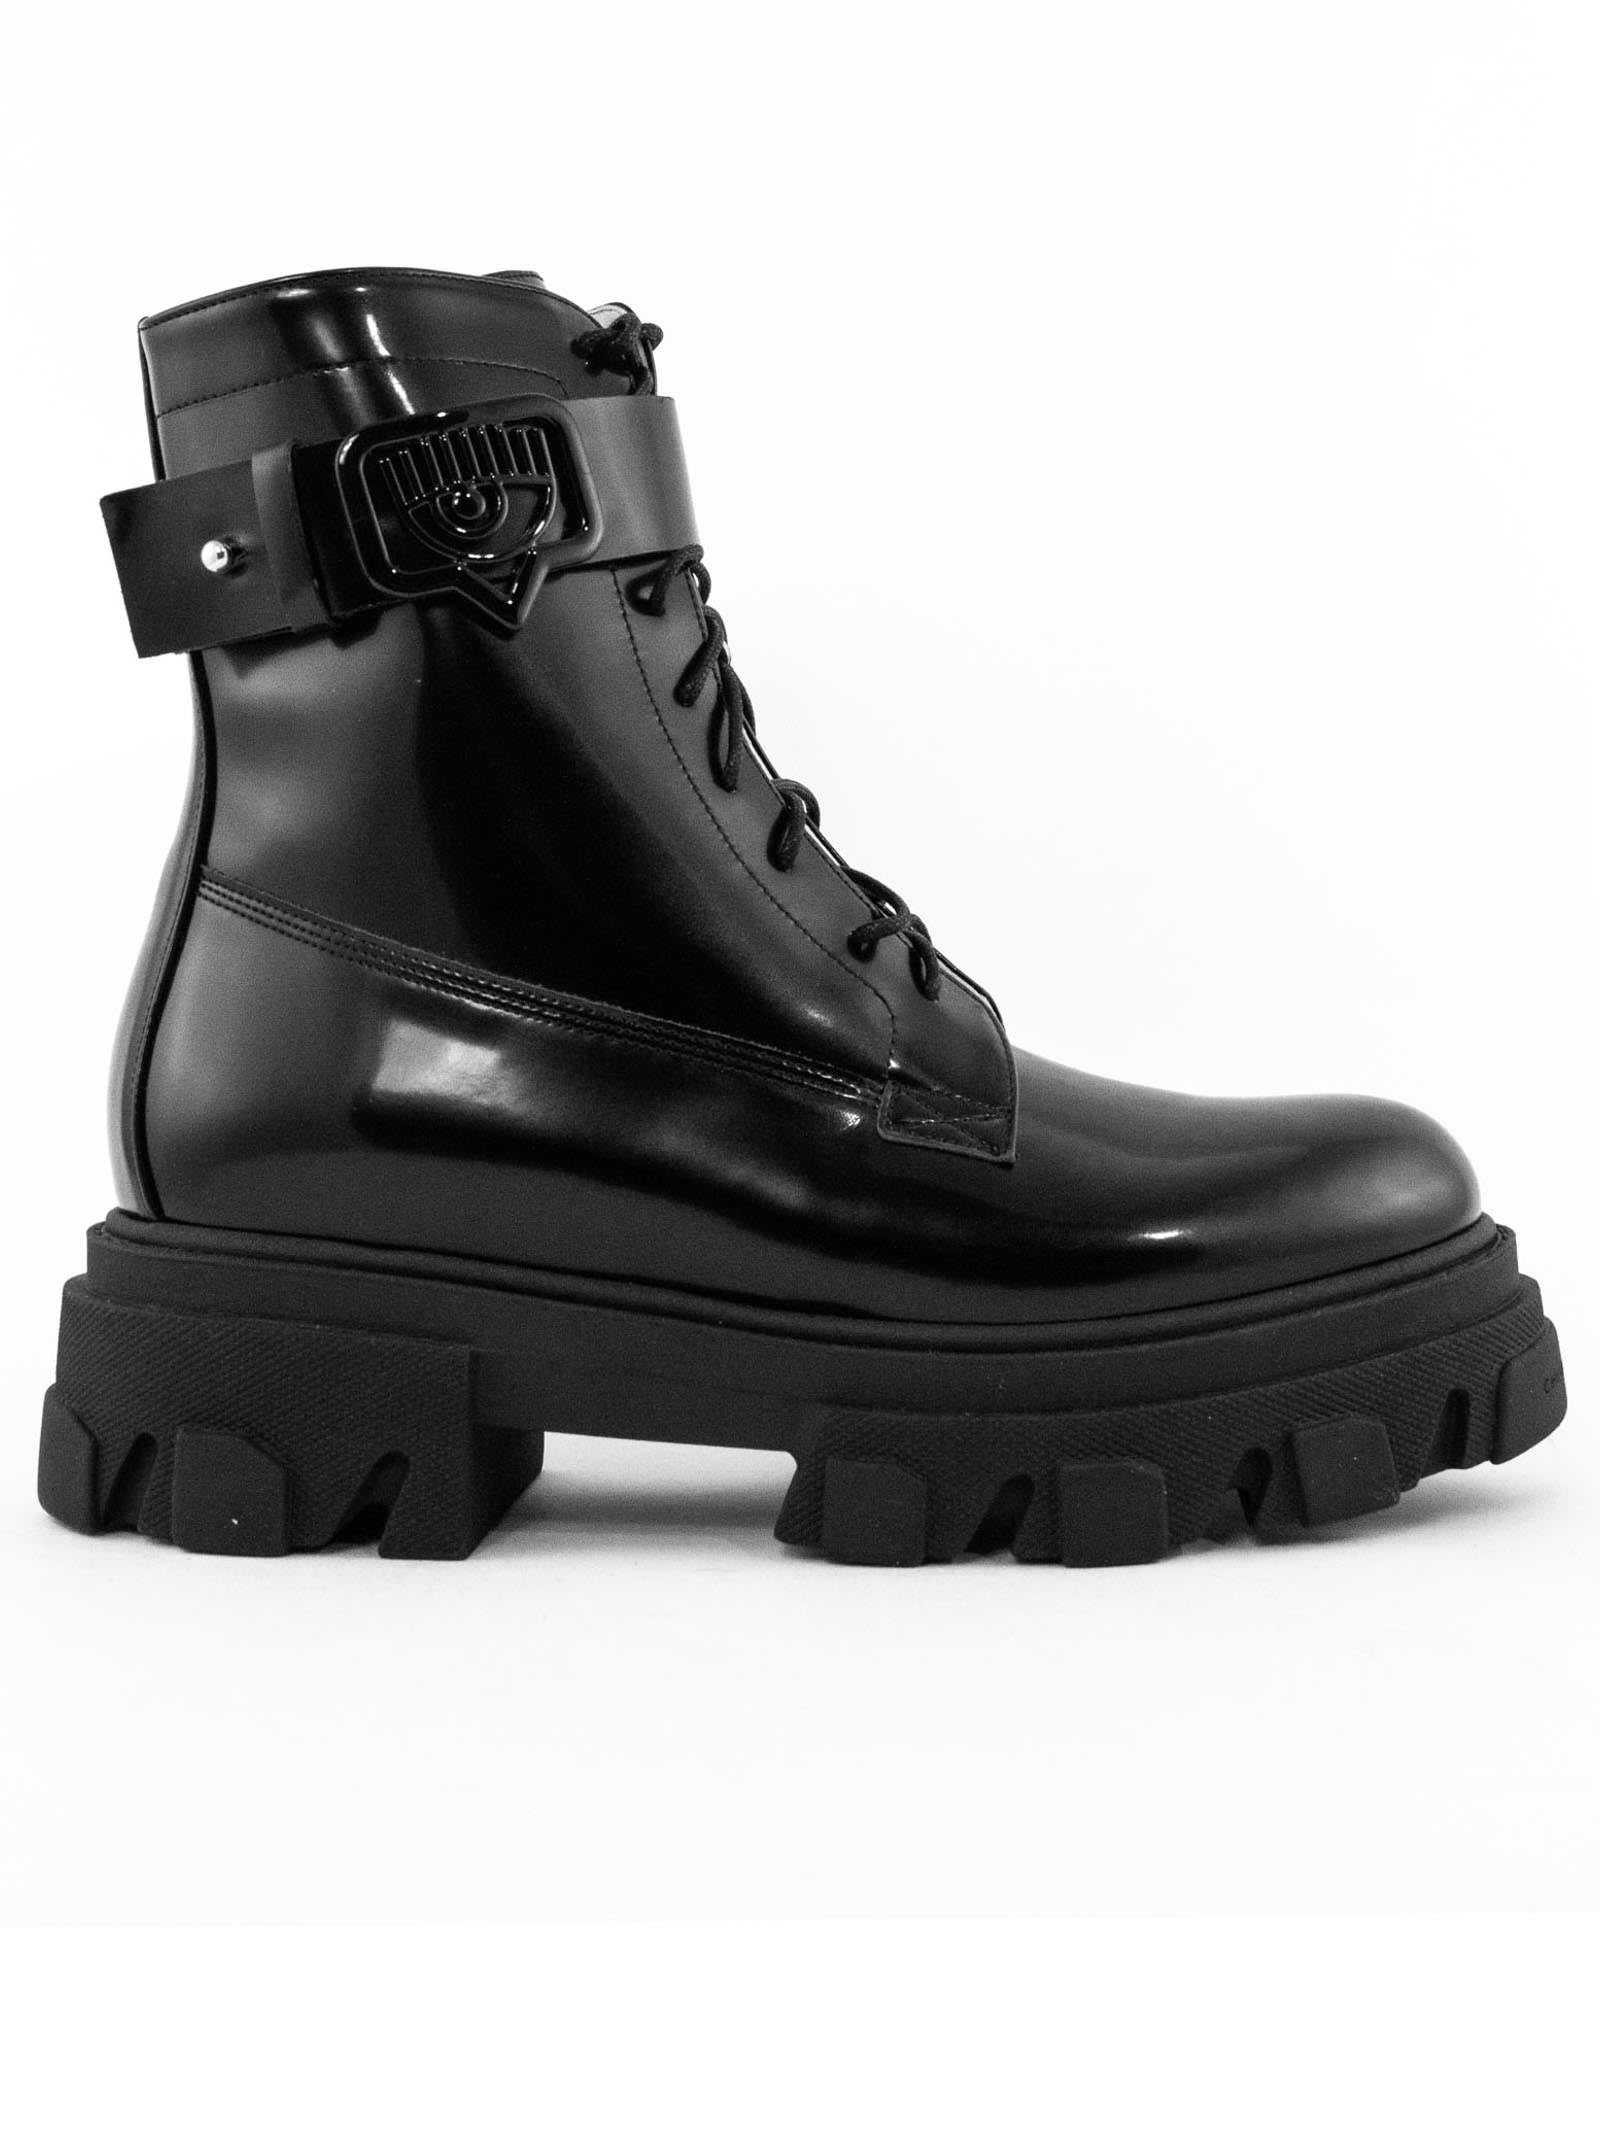 Chiara Ferragni Black Shiny Leather Ankle Boot